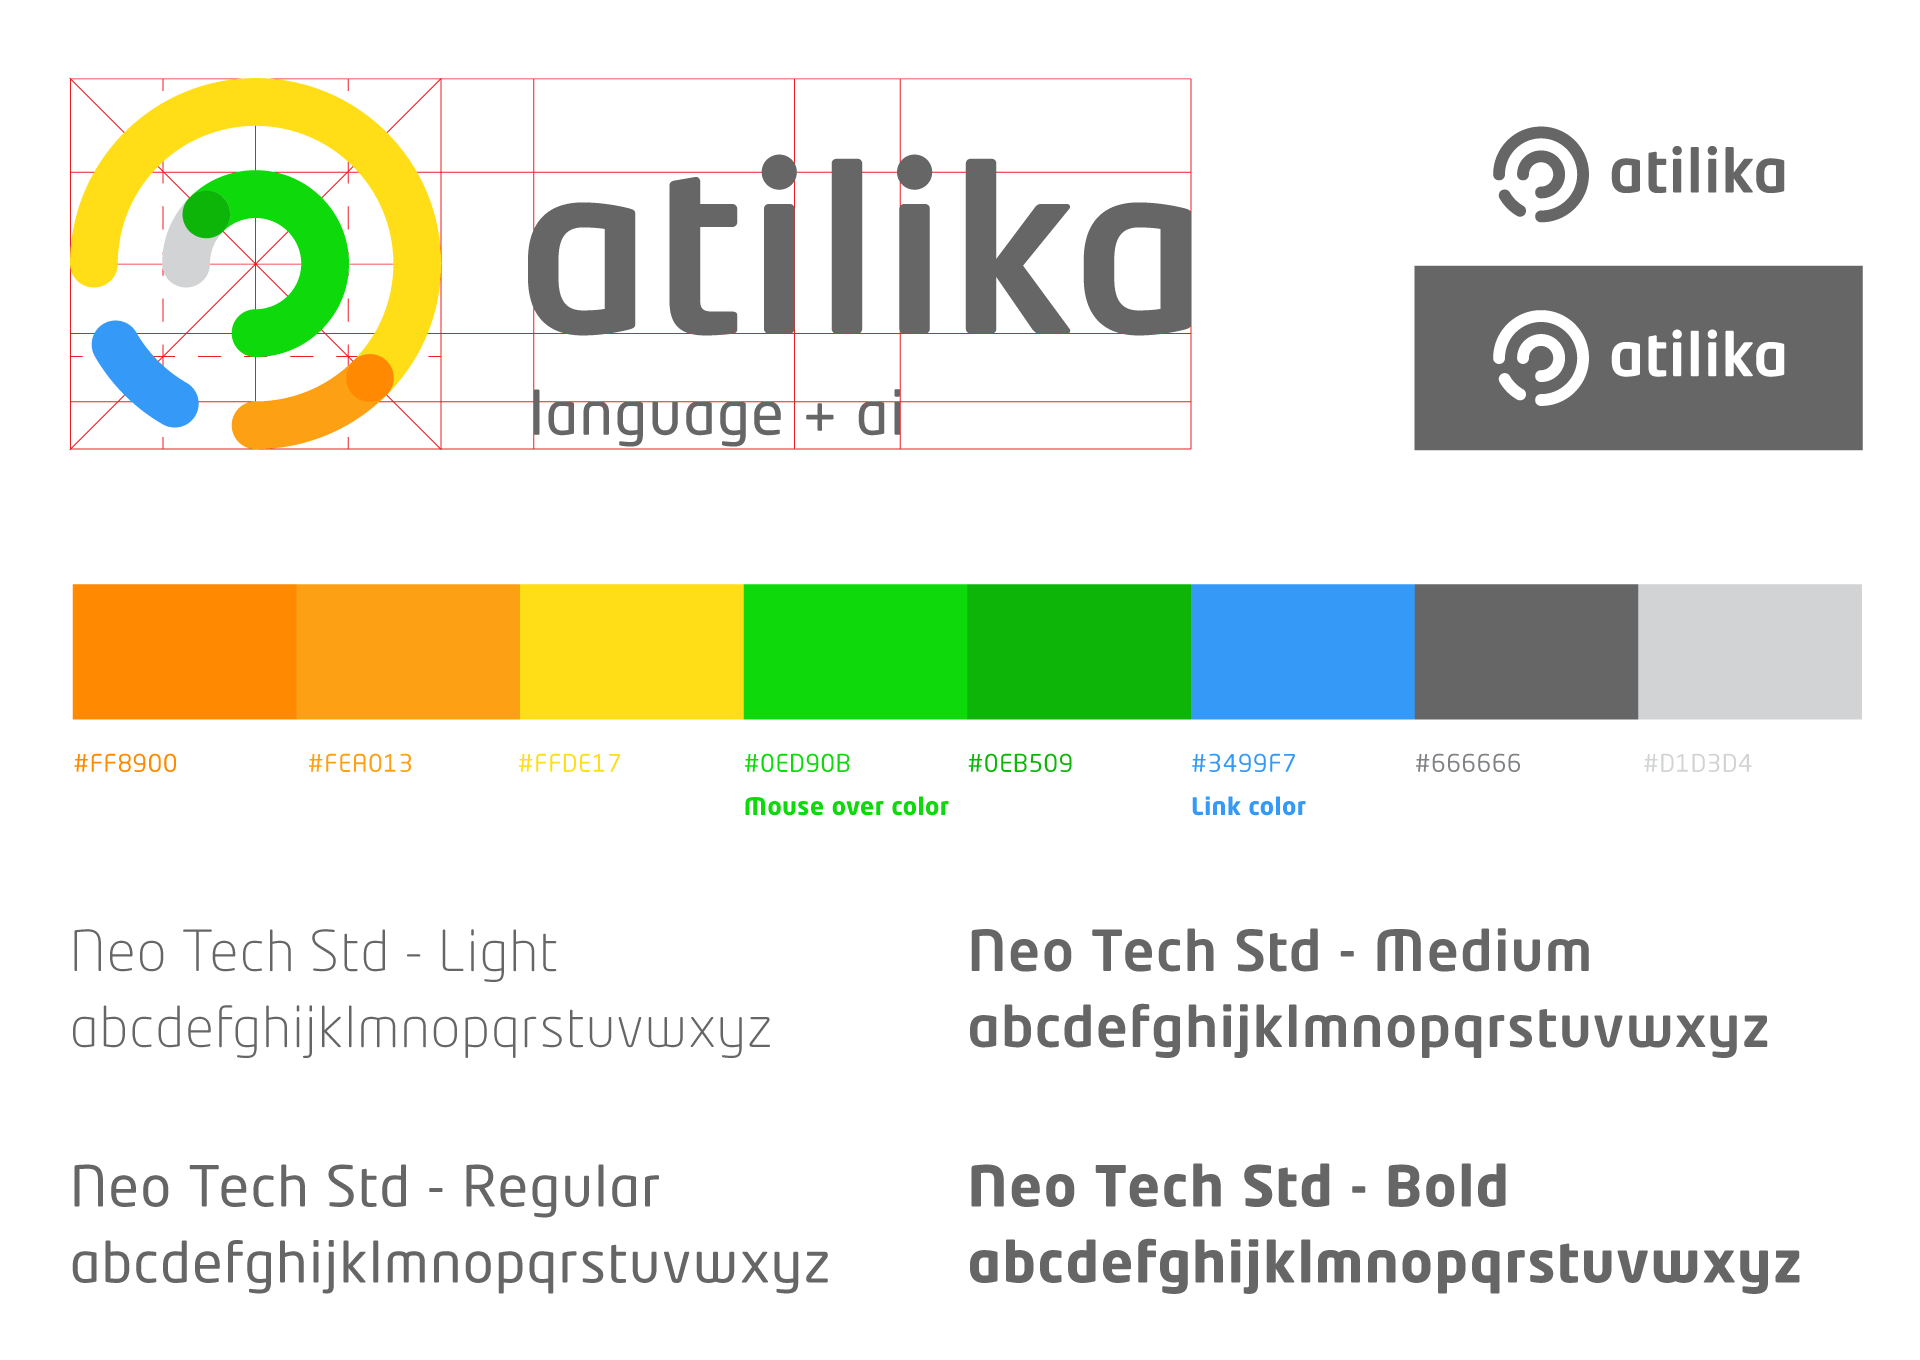 Atilika Tokyo Japan - ai artificial intelligence & language processing - corporate identity and brand guideline